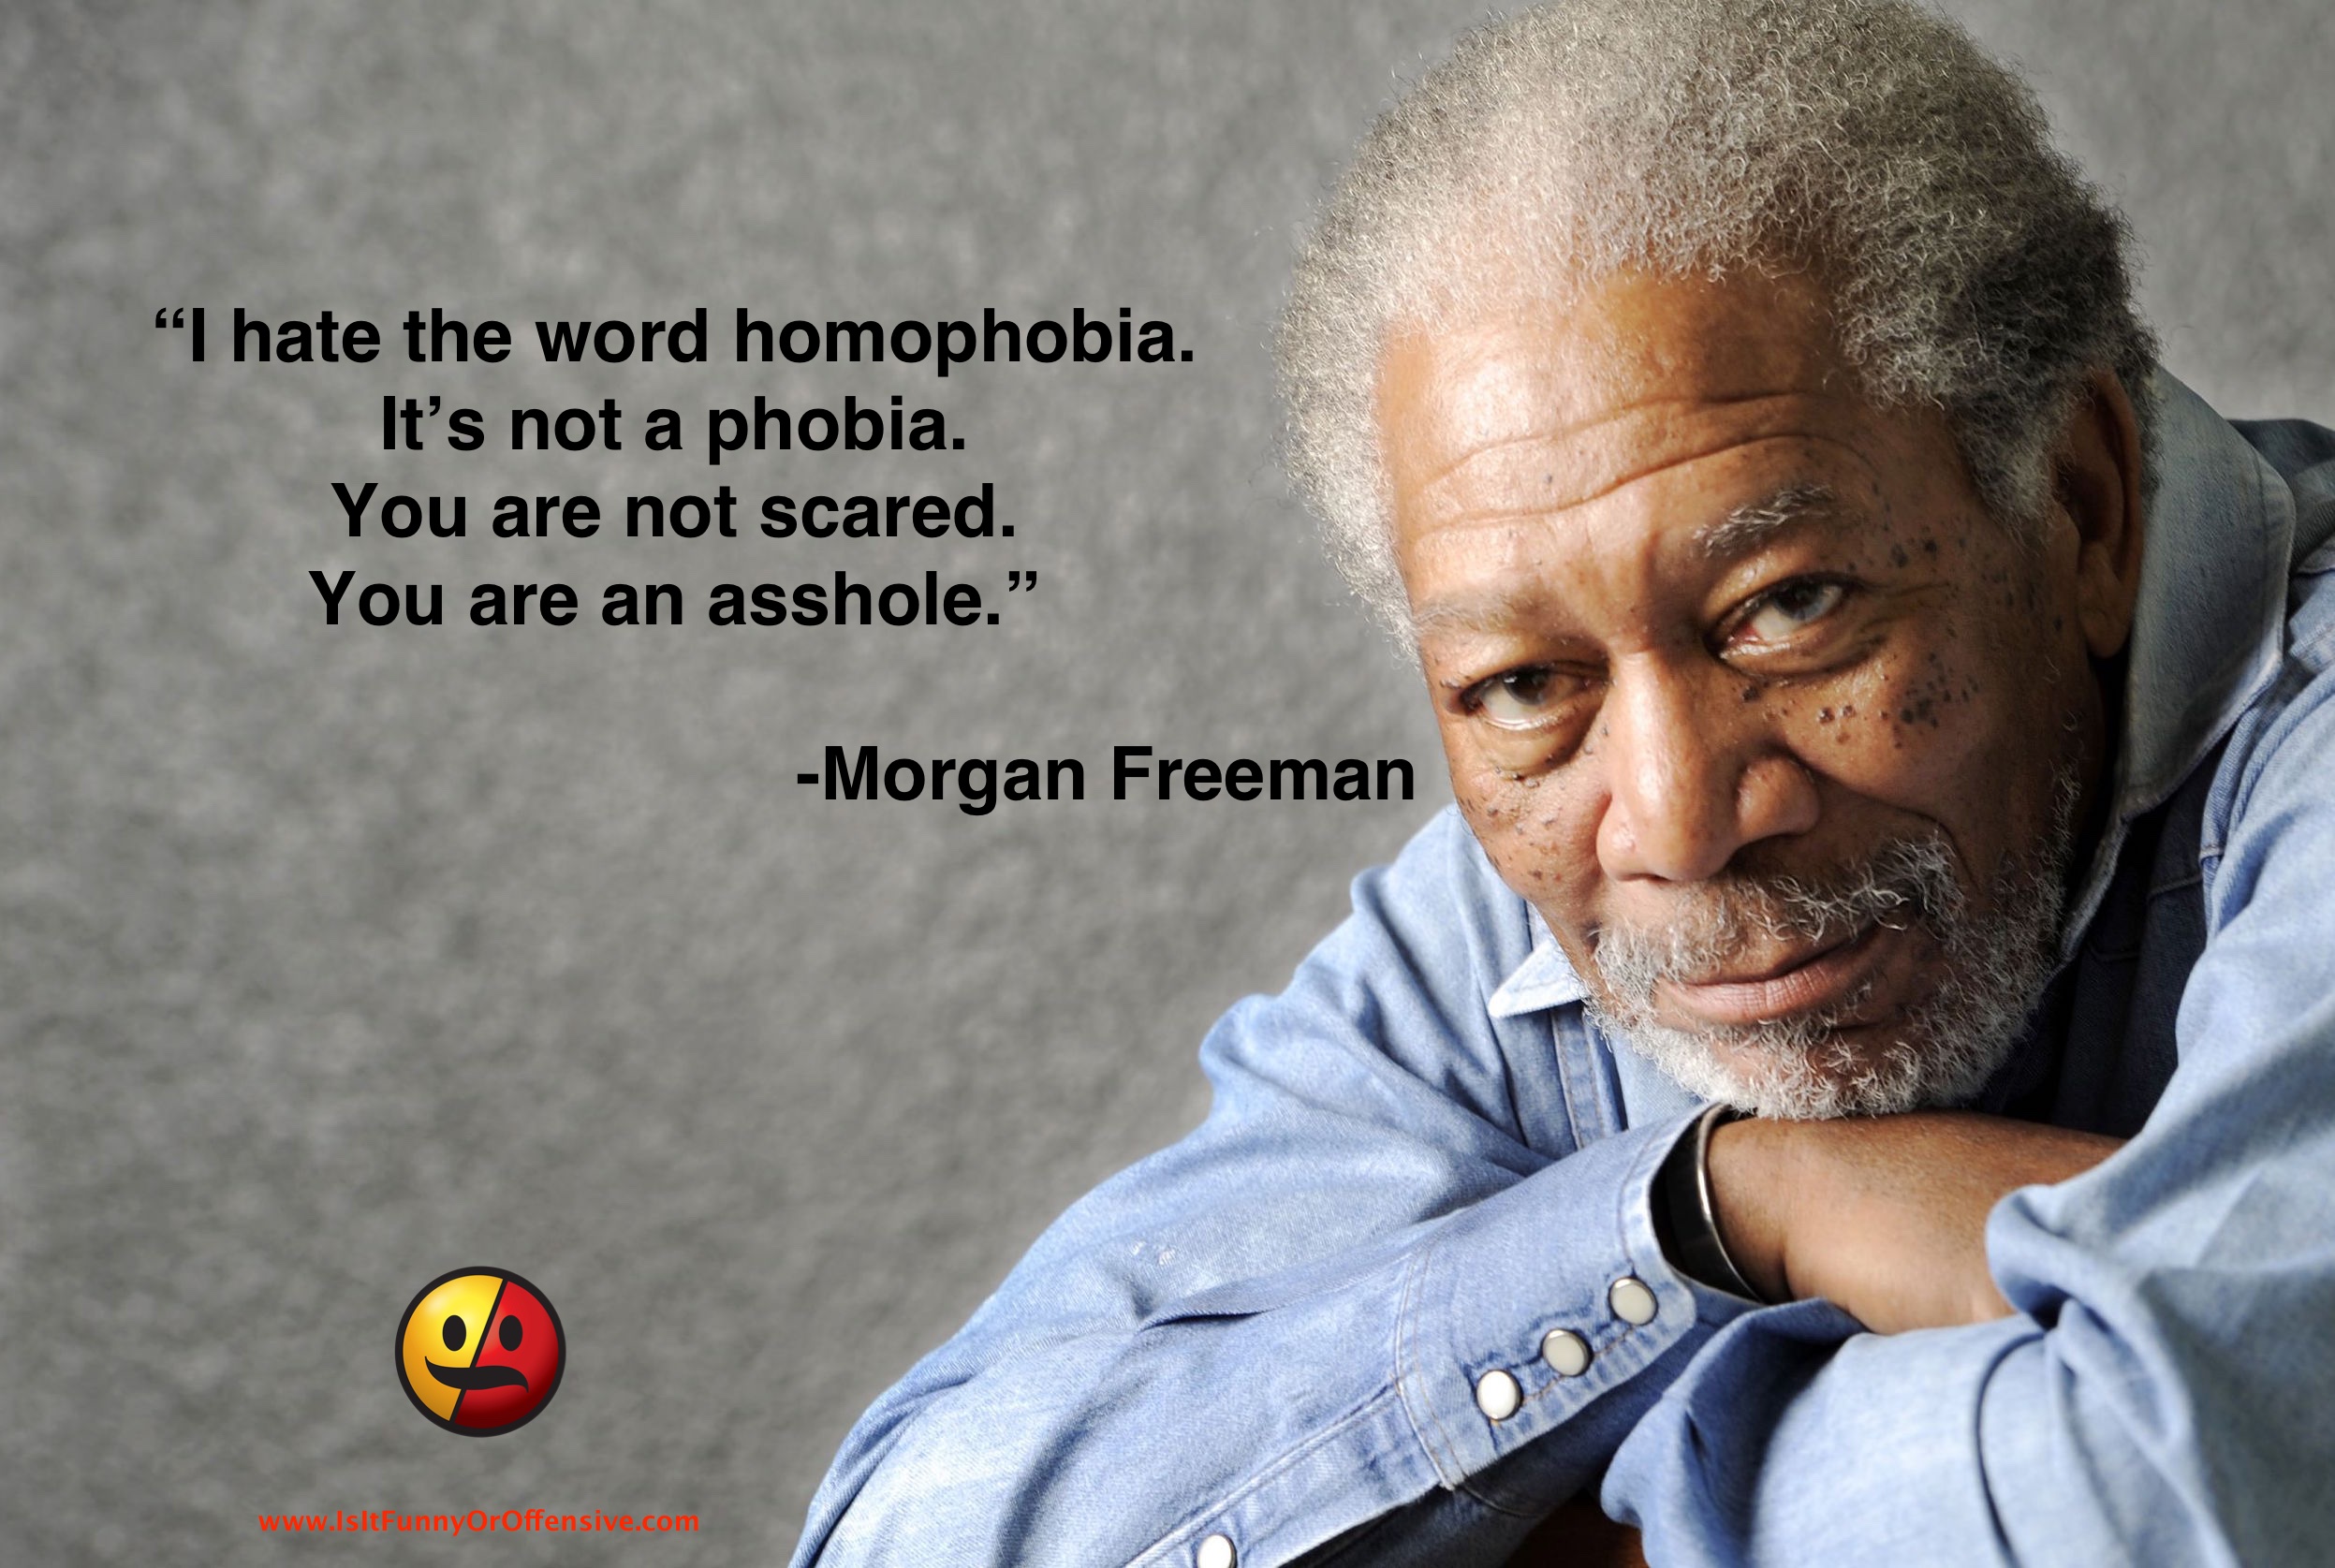 Morgan Freeman on Homophobia